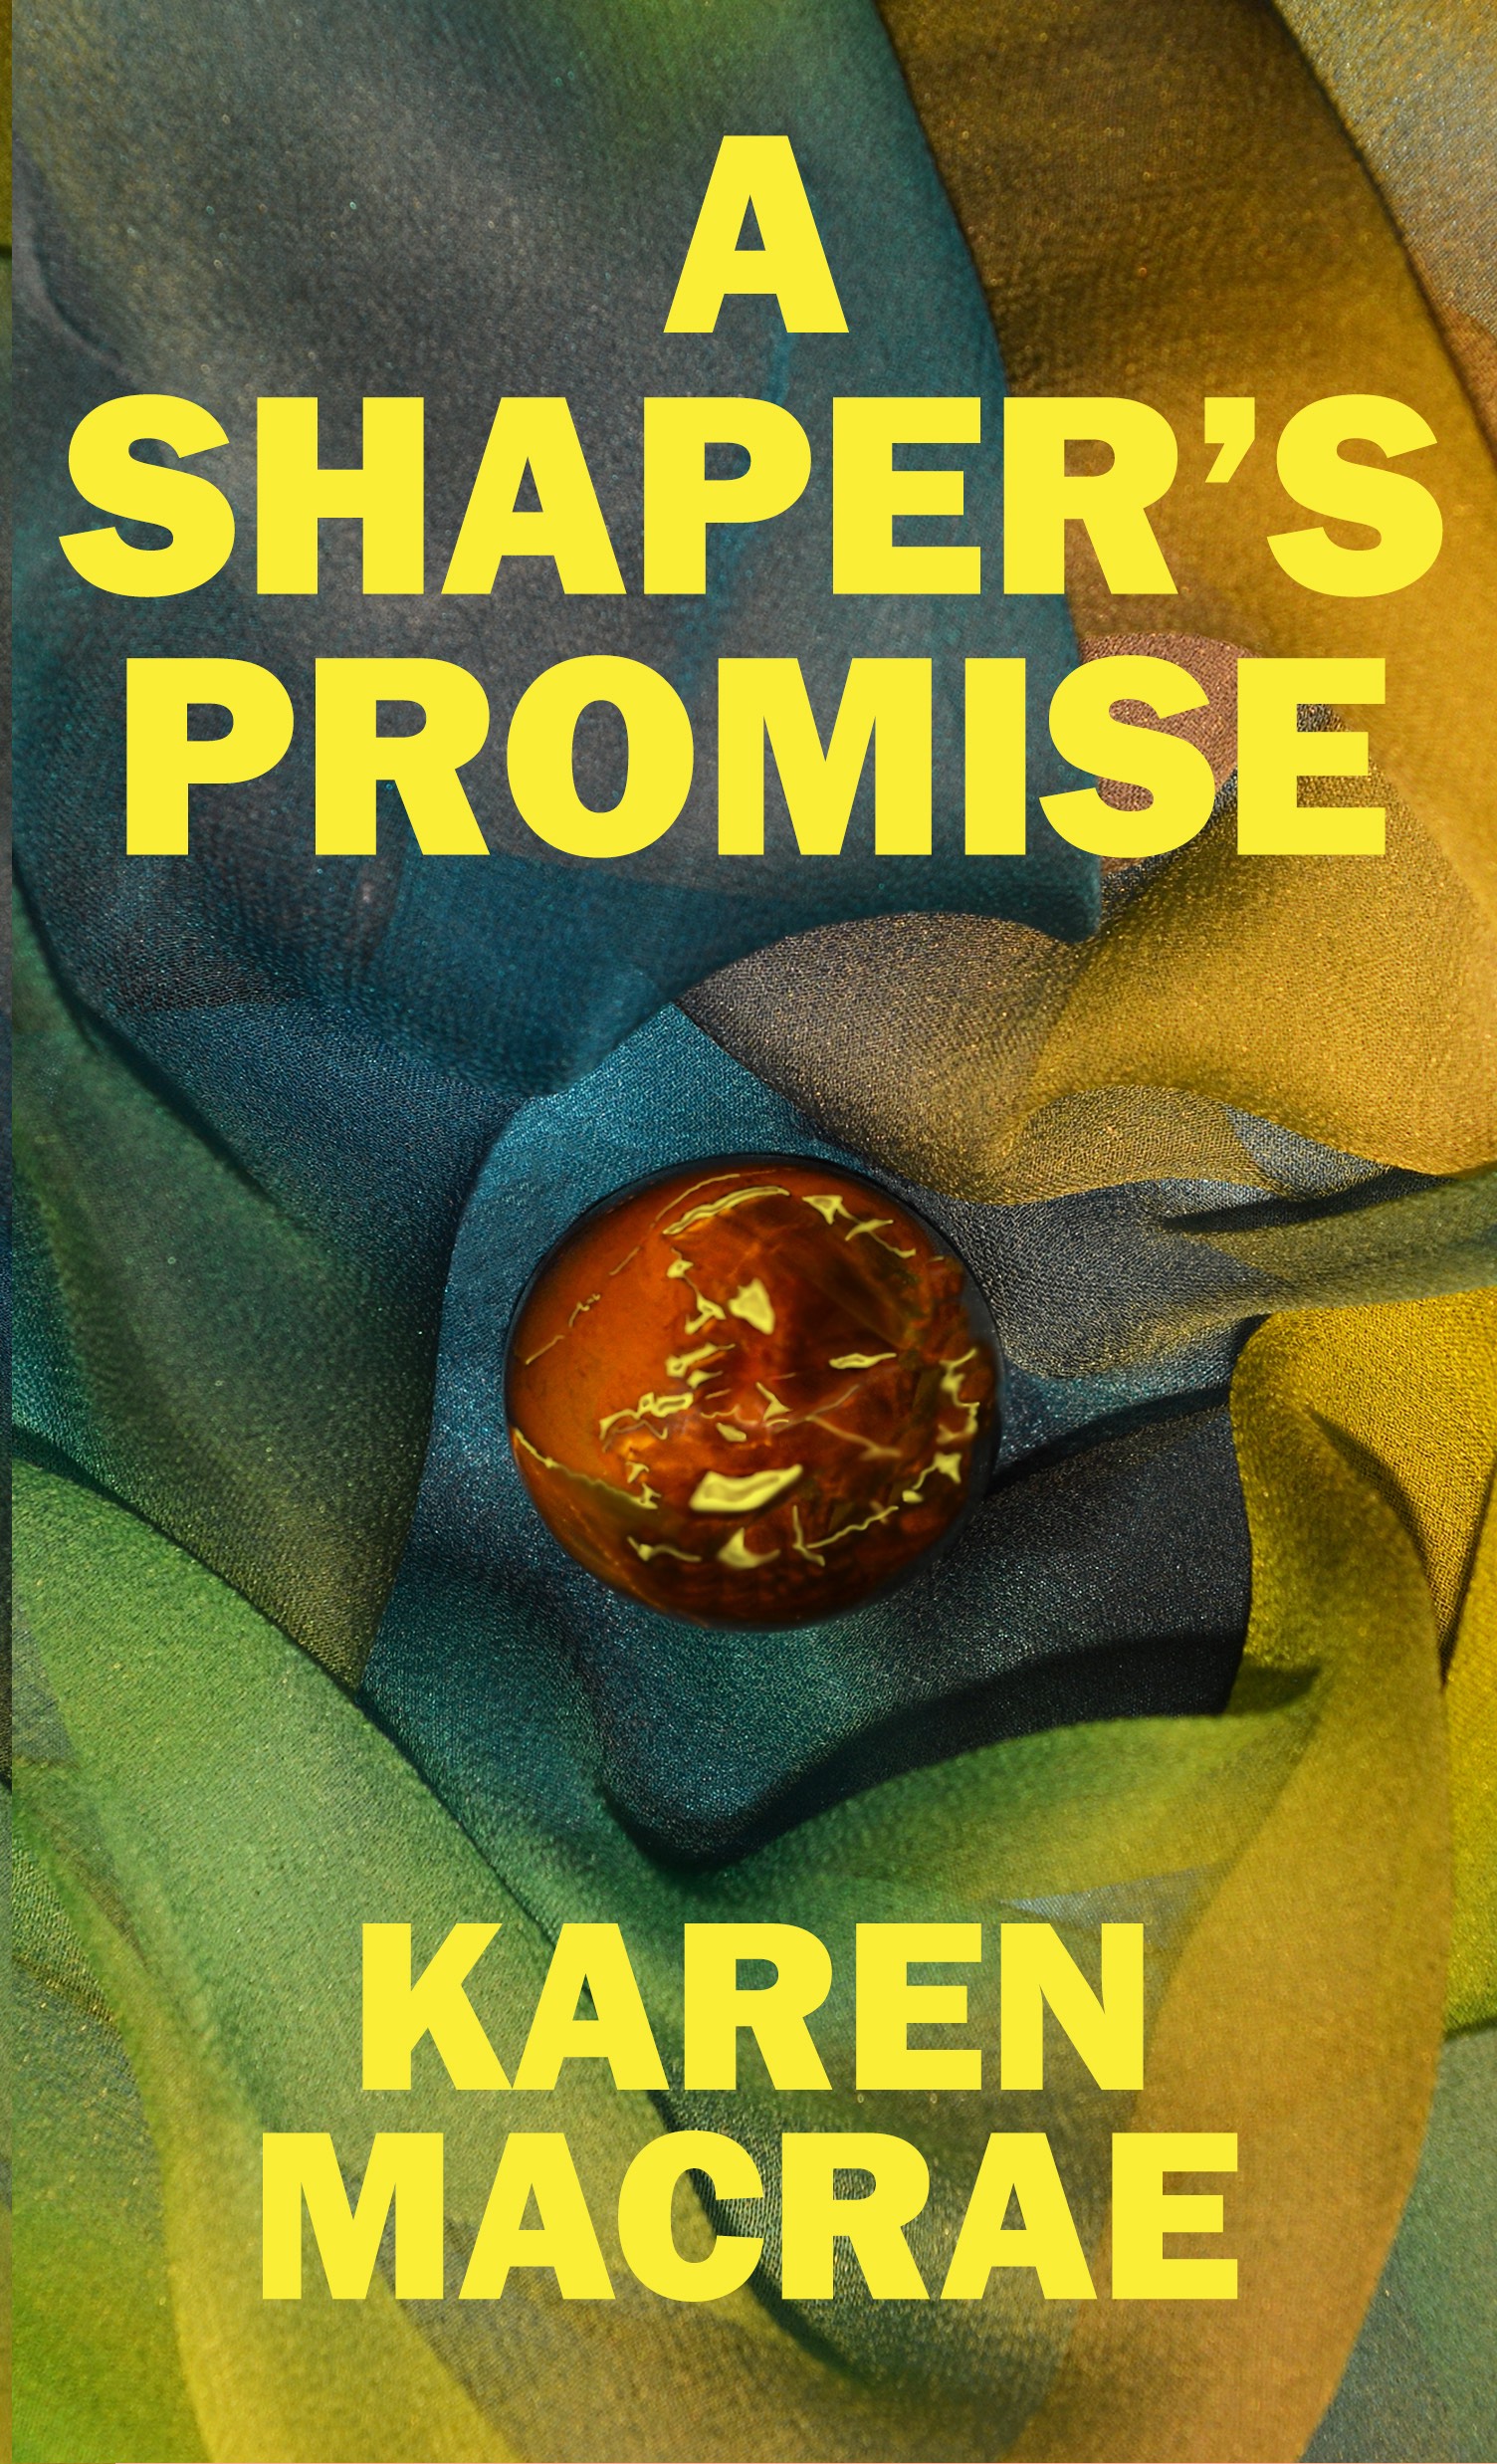 FREE: A Shaper’s Promise by Karen MacRae